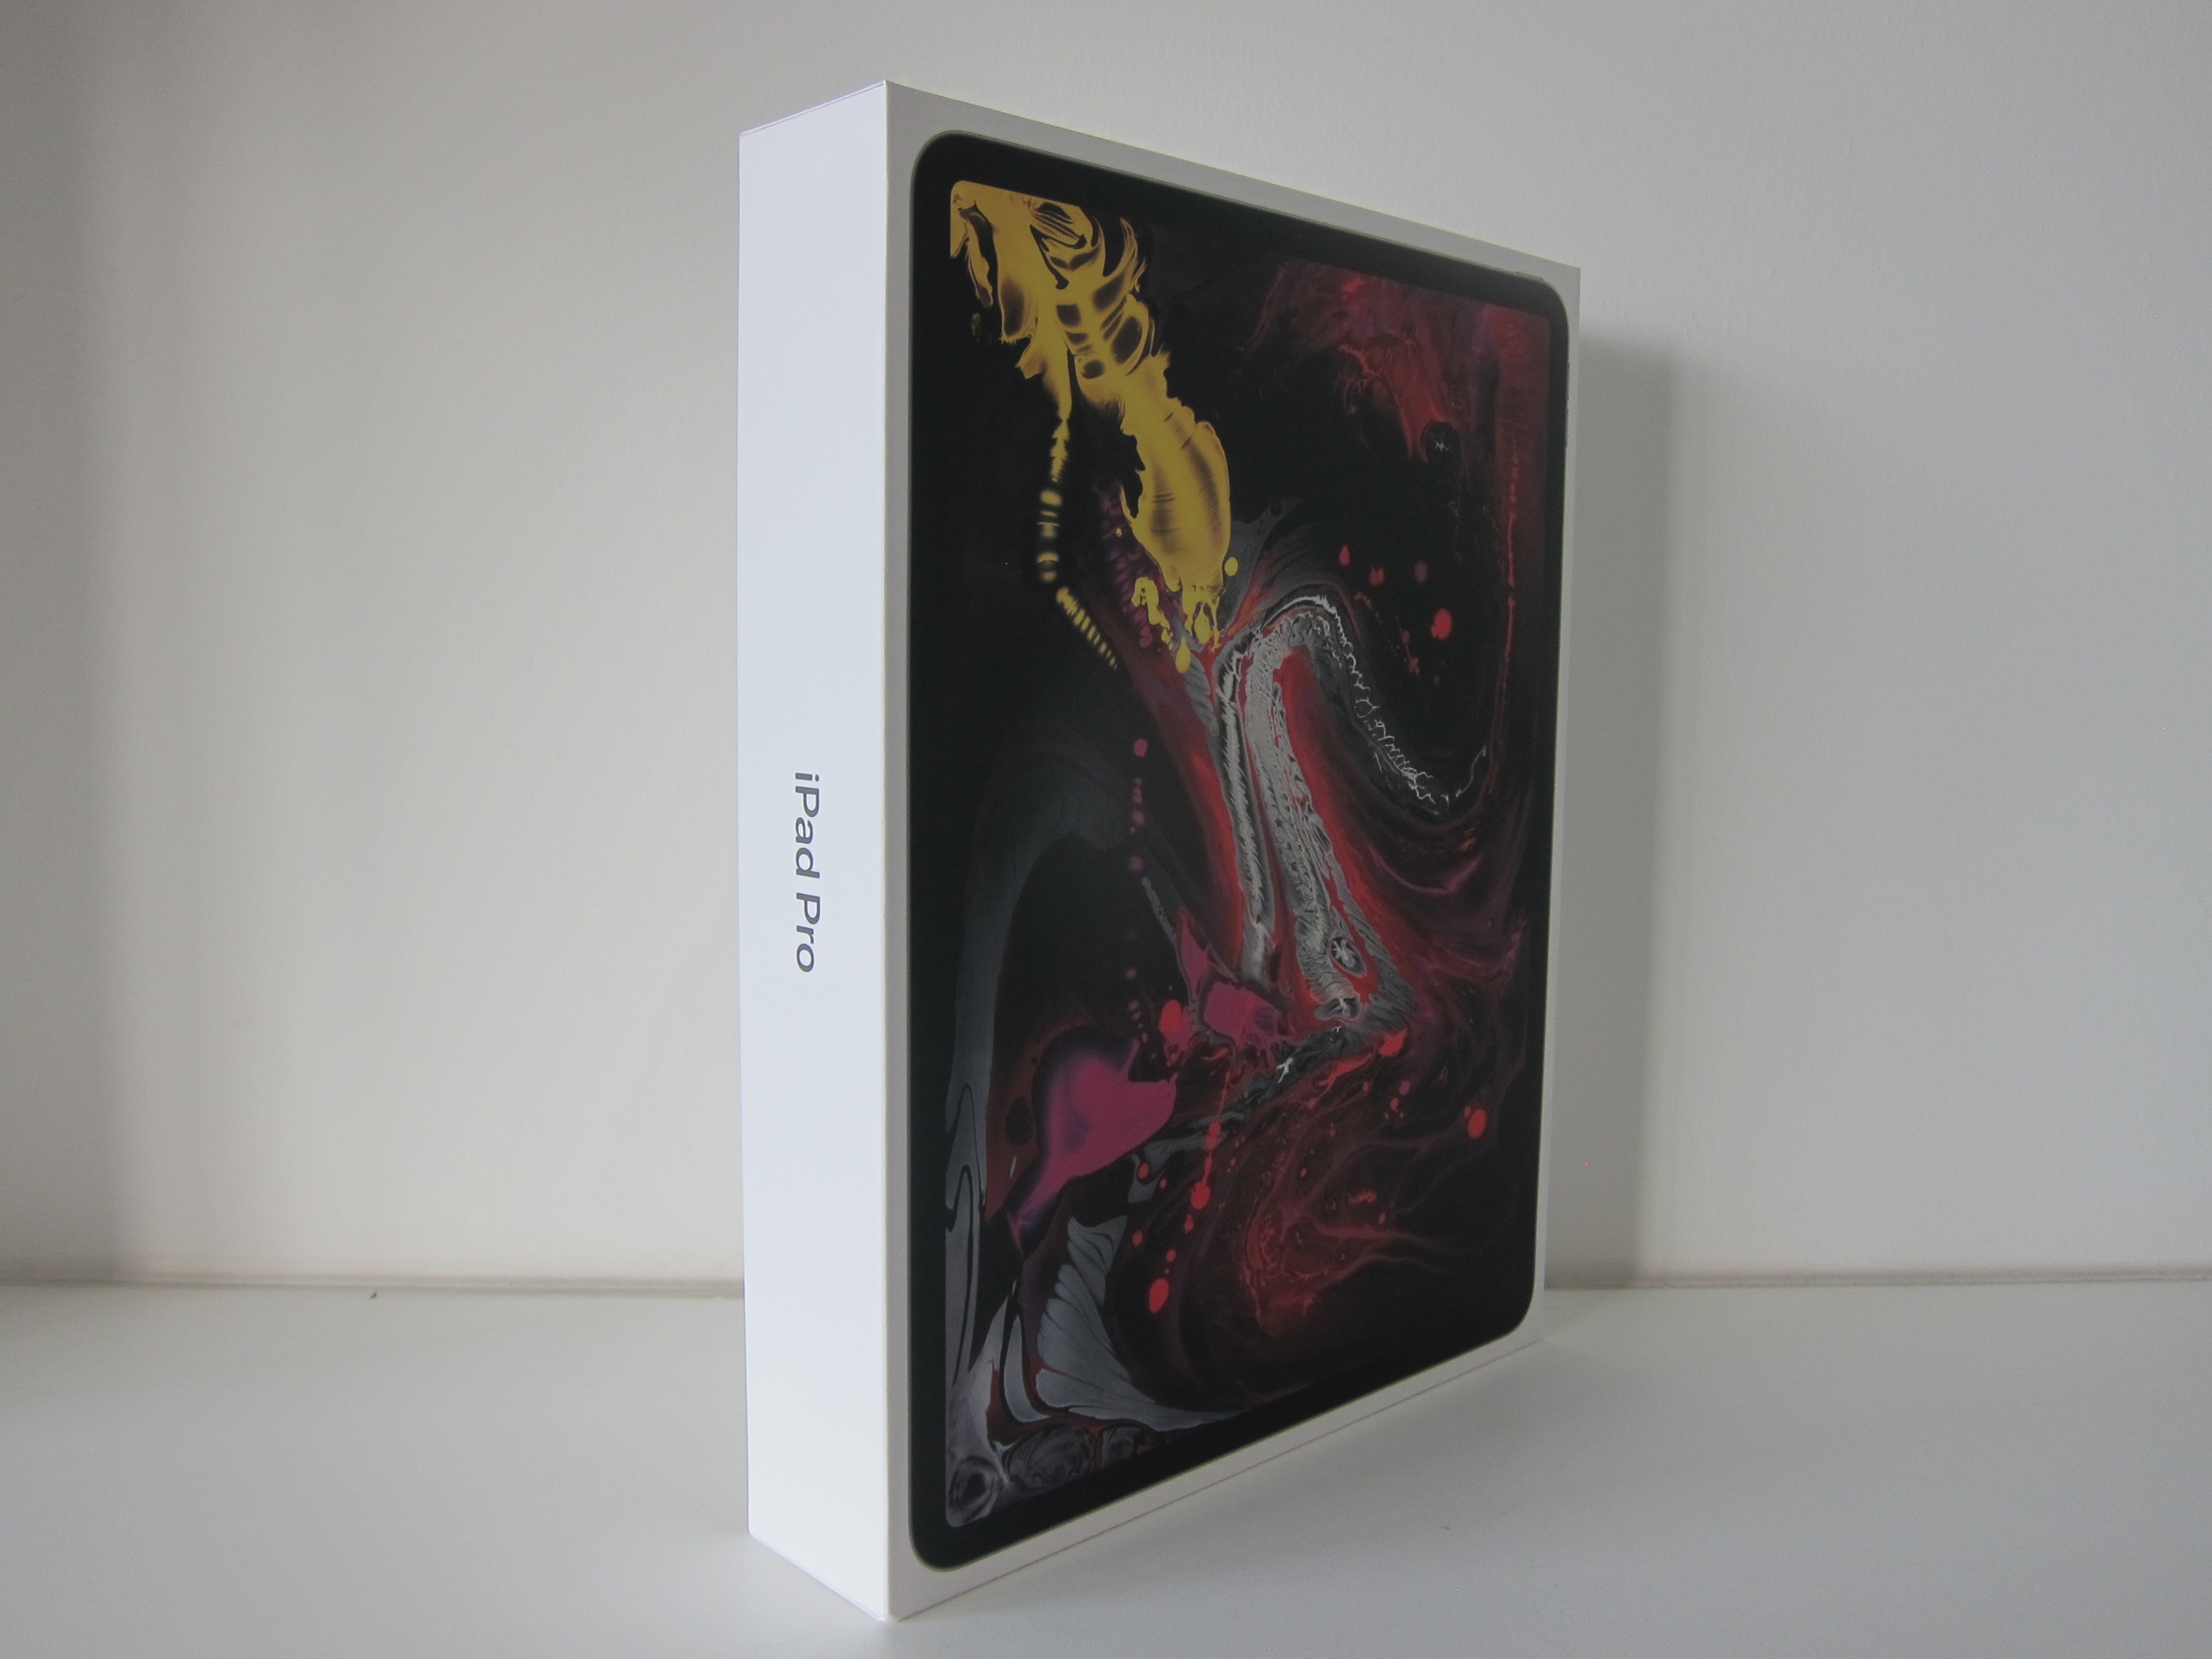 Apple iPad Pro 12.9â€³ (3rd Generation) (Space Grey 256GB) (Wi-Fi